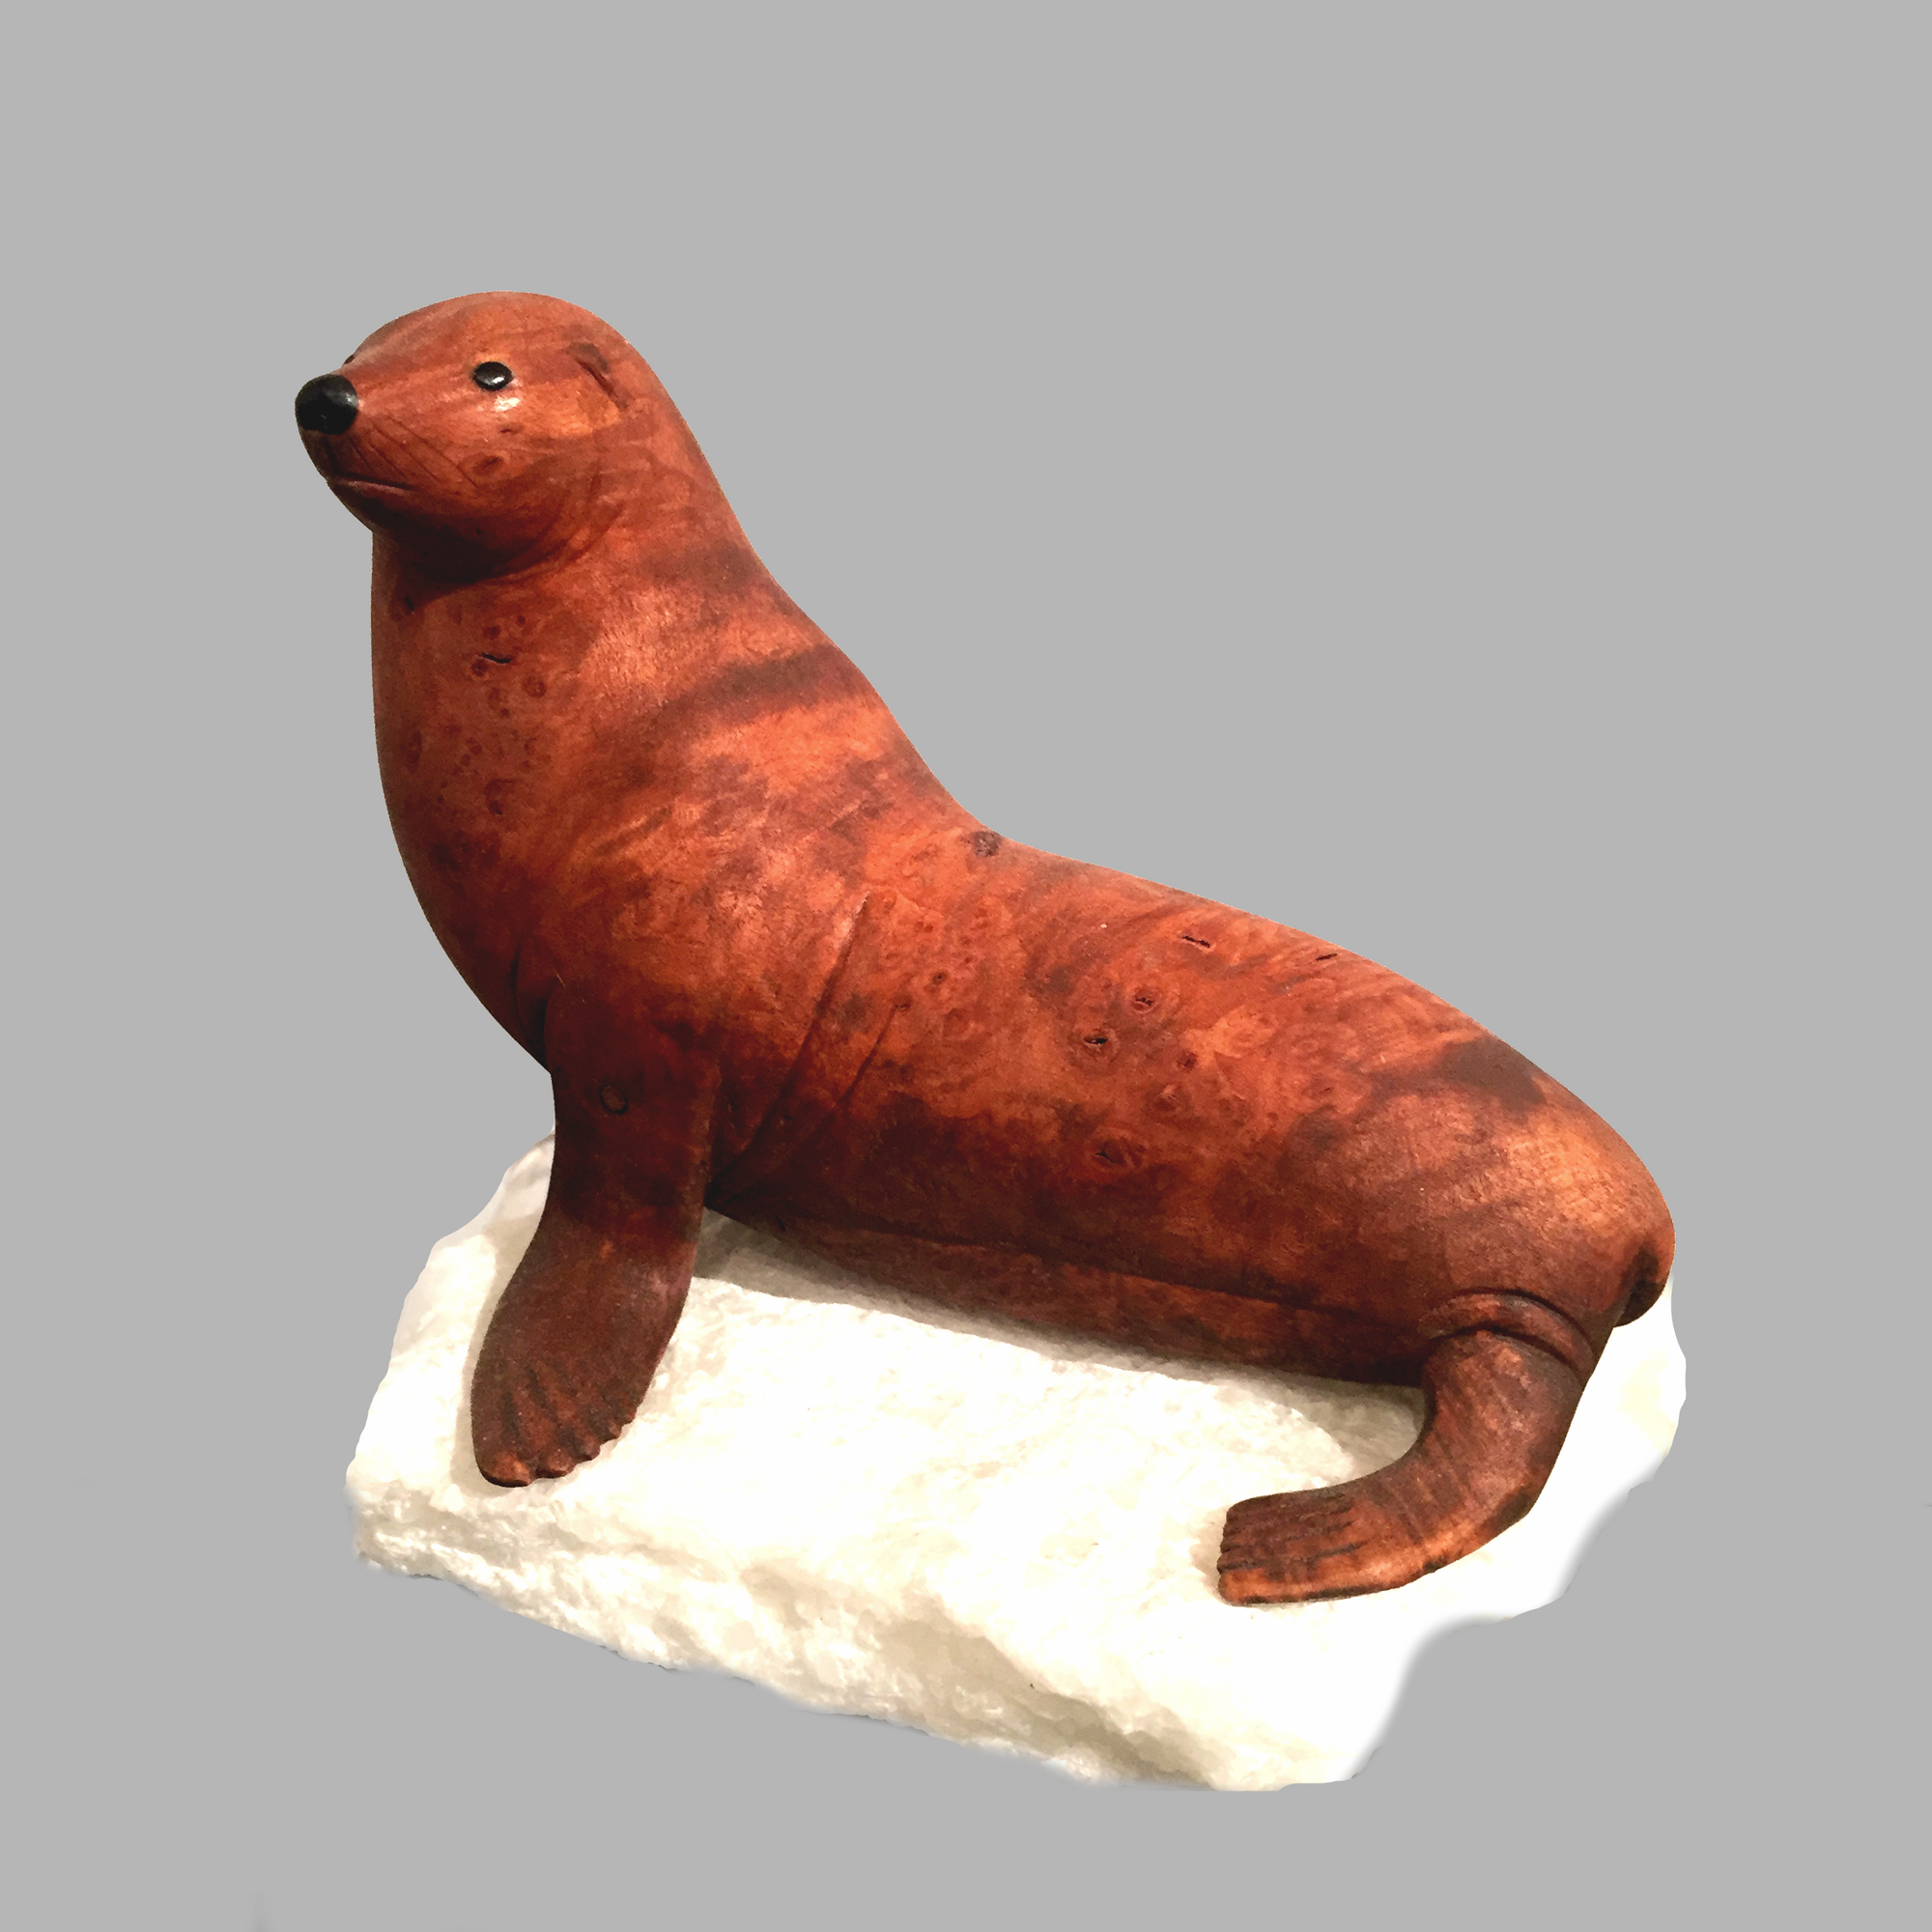 Seal Minature Animal wood carving by Salt Spring Island artist Jim Dearing